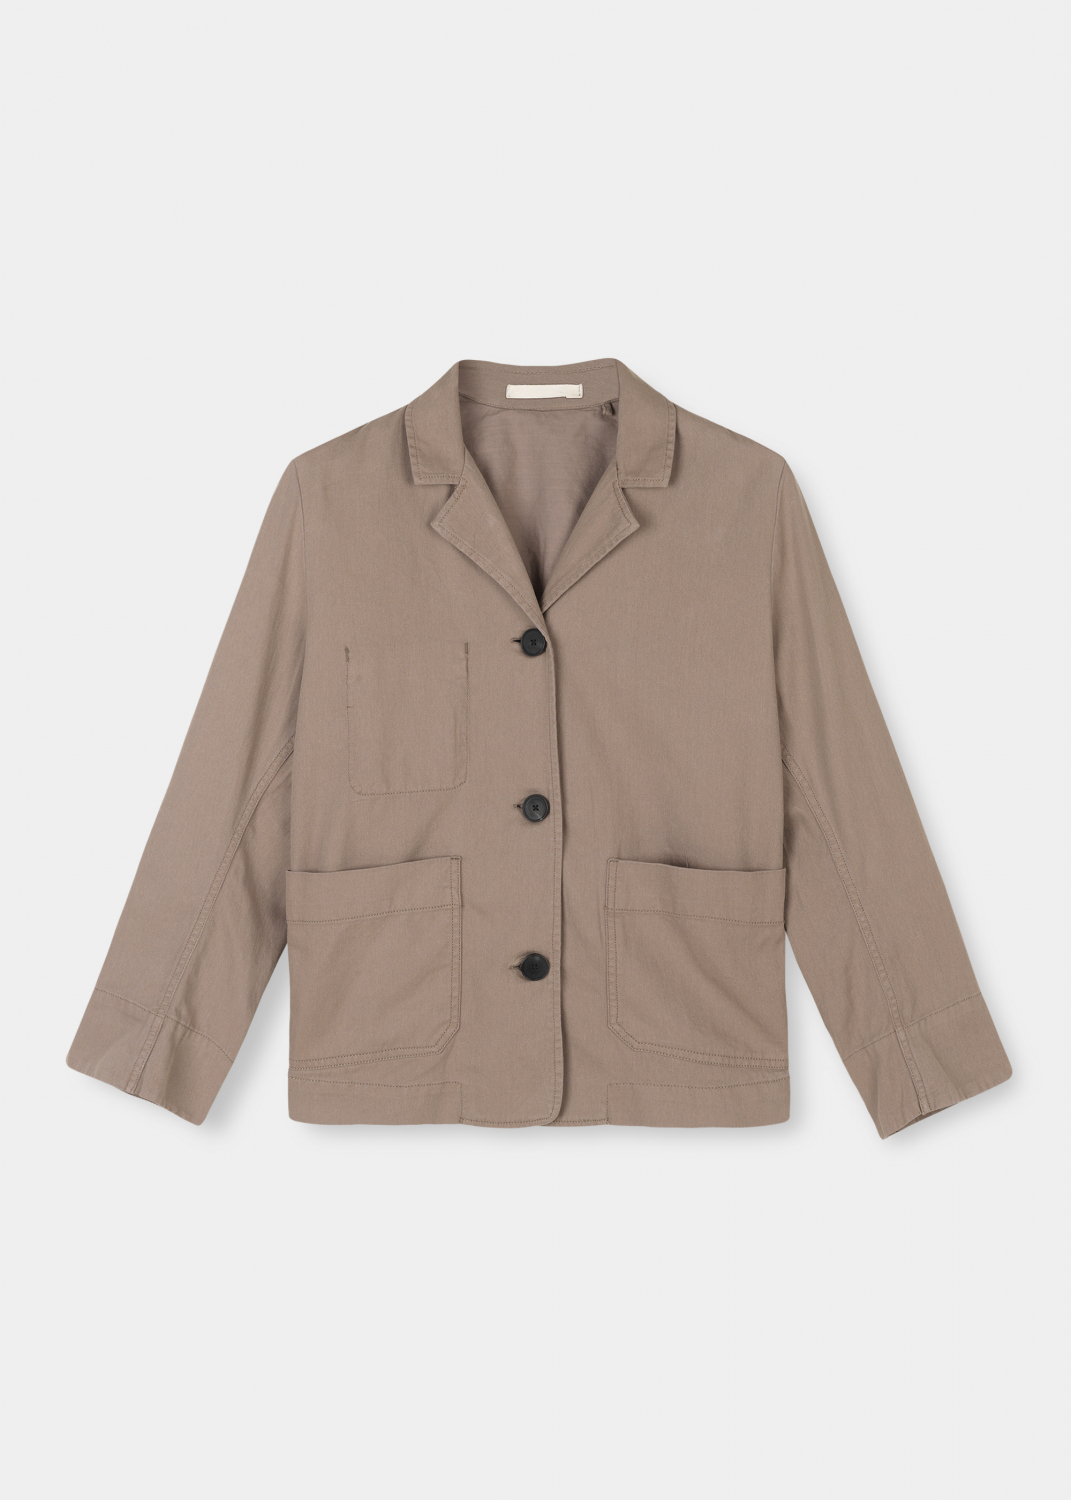 Outerwear - Soft Jacket Twill